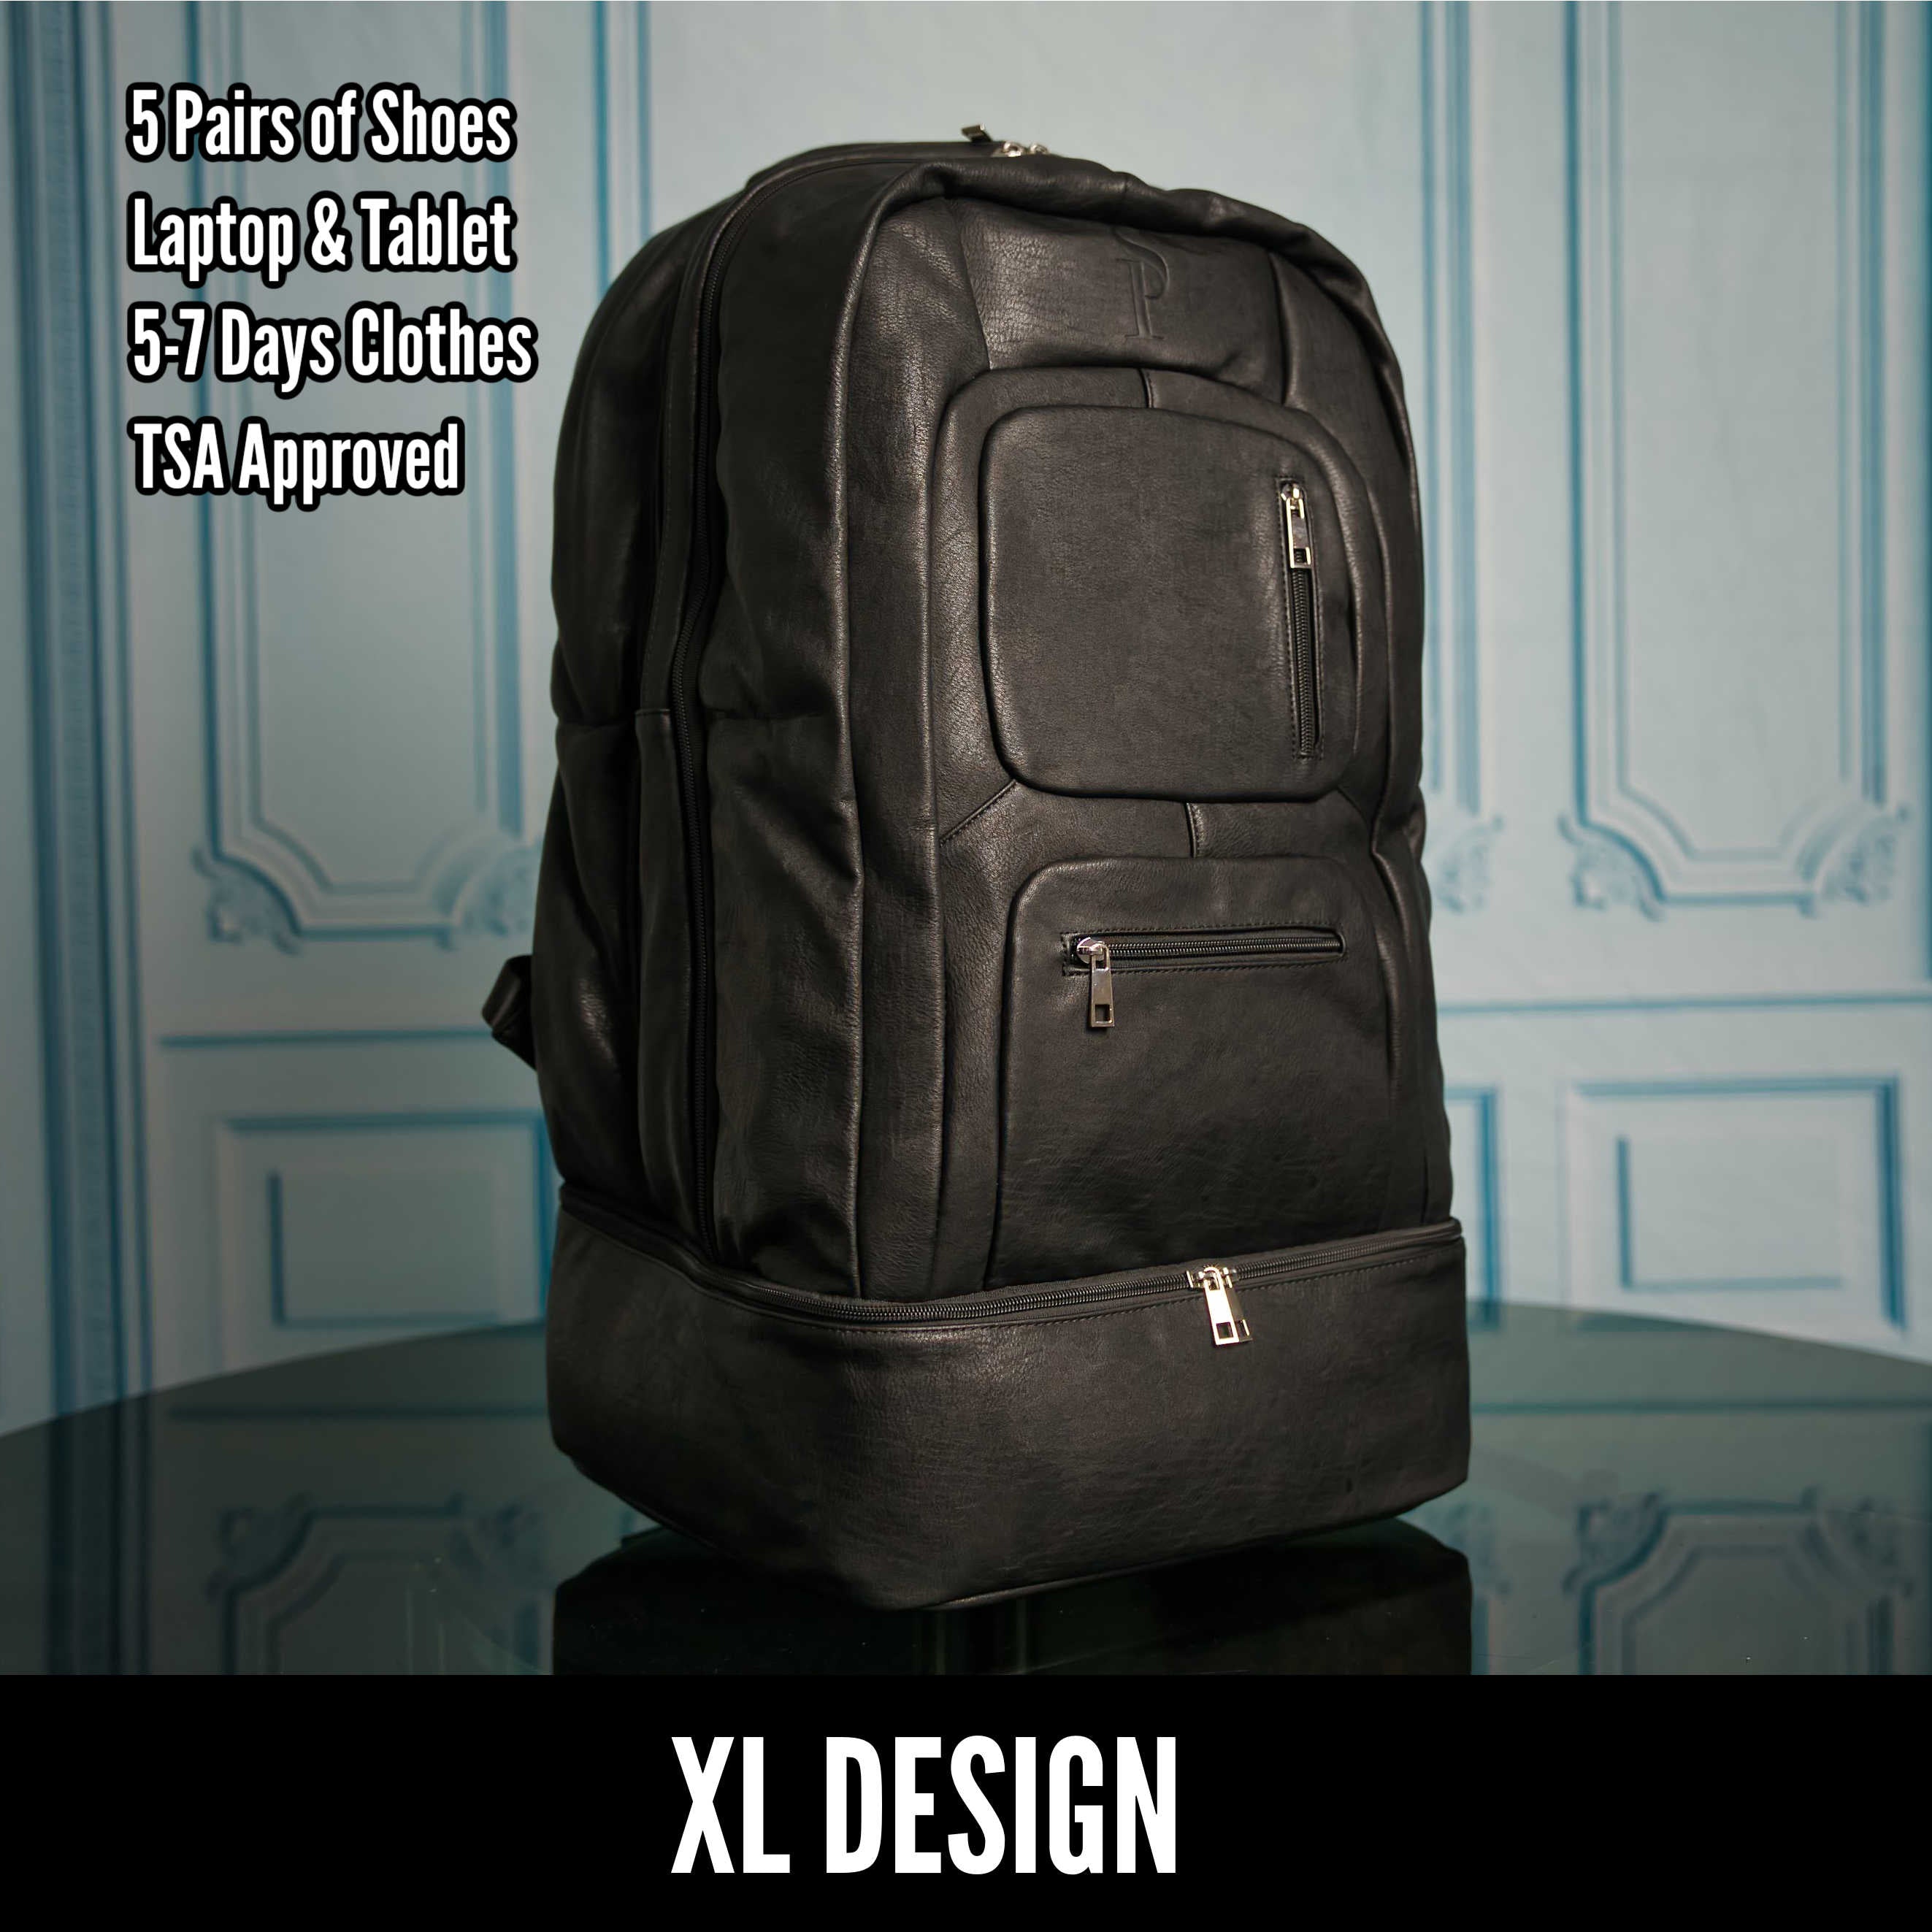 Black Leather Patented Shoe Bag (XL Design) *Holds Size 17 - Sole Premise